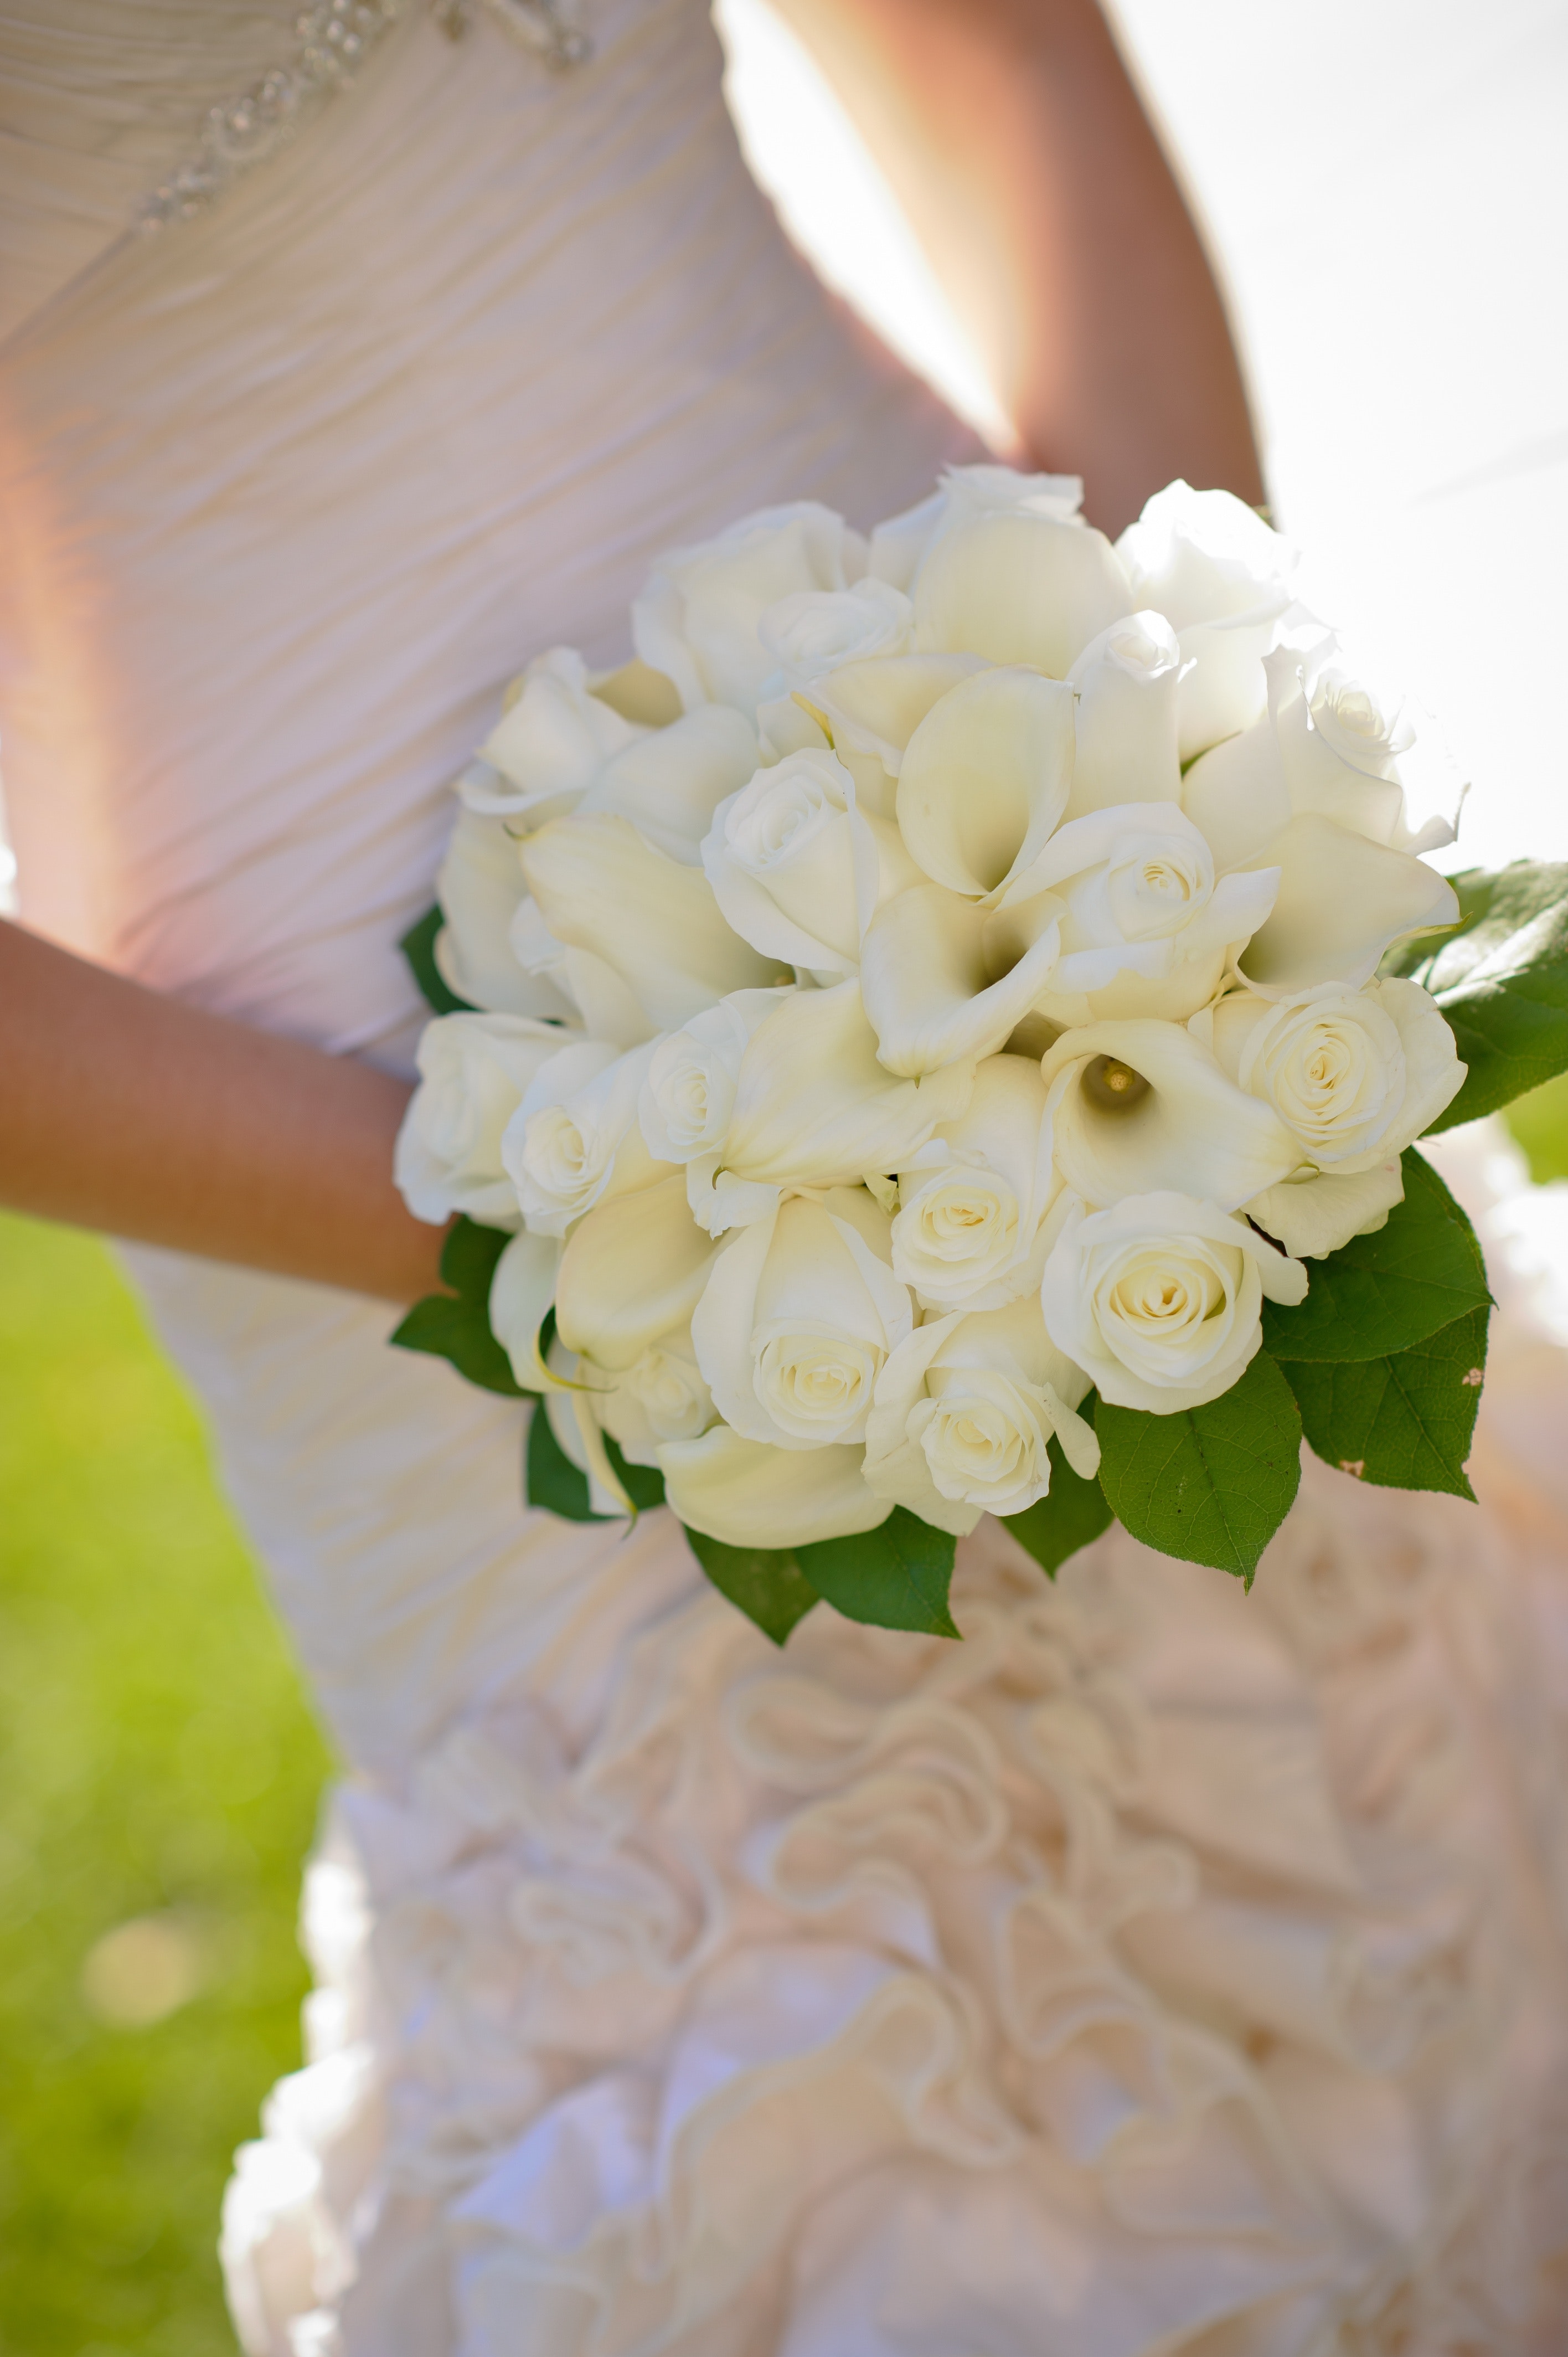 Woman in Wedding Dress Holding White Flower Bouquet, Bouquet, Bridal, Bridal gown, Bride, HQ Photo